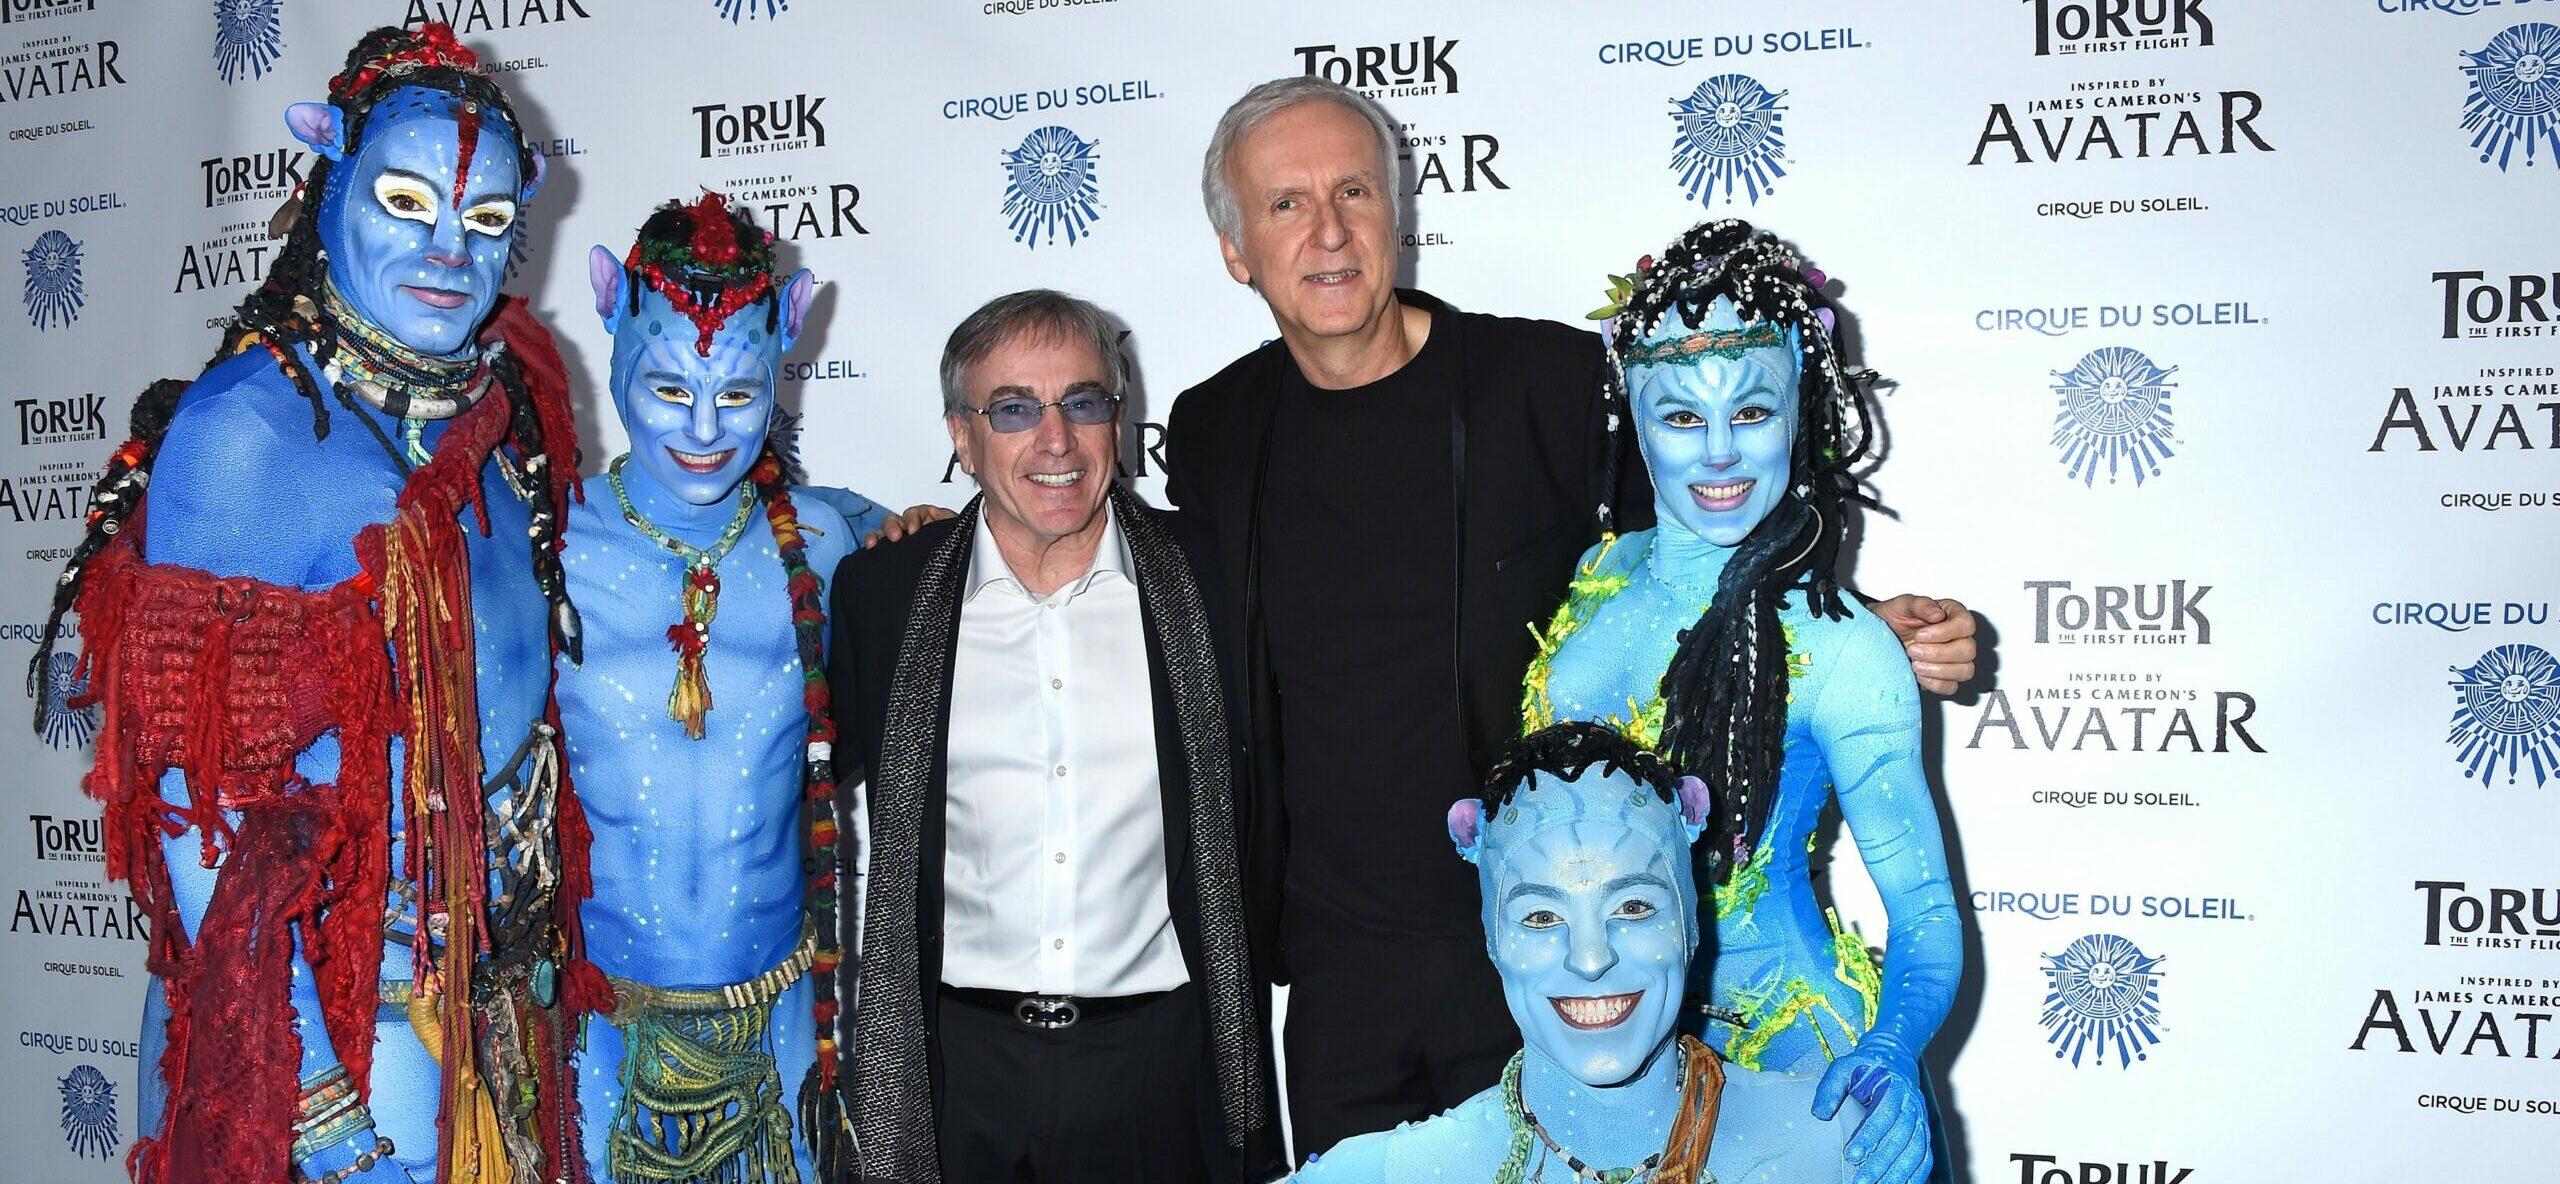 King Avatar by James Cameron 20th Century Studios 2022 · Creative Fabrica